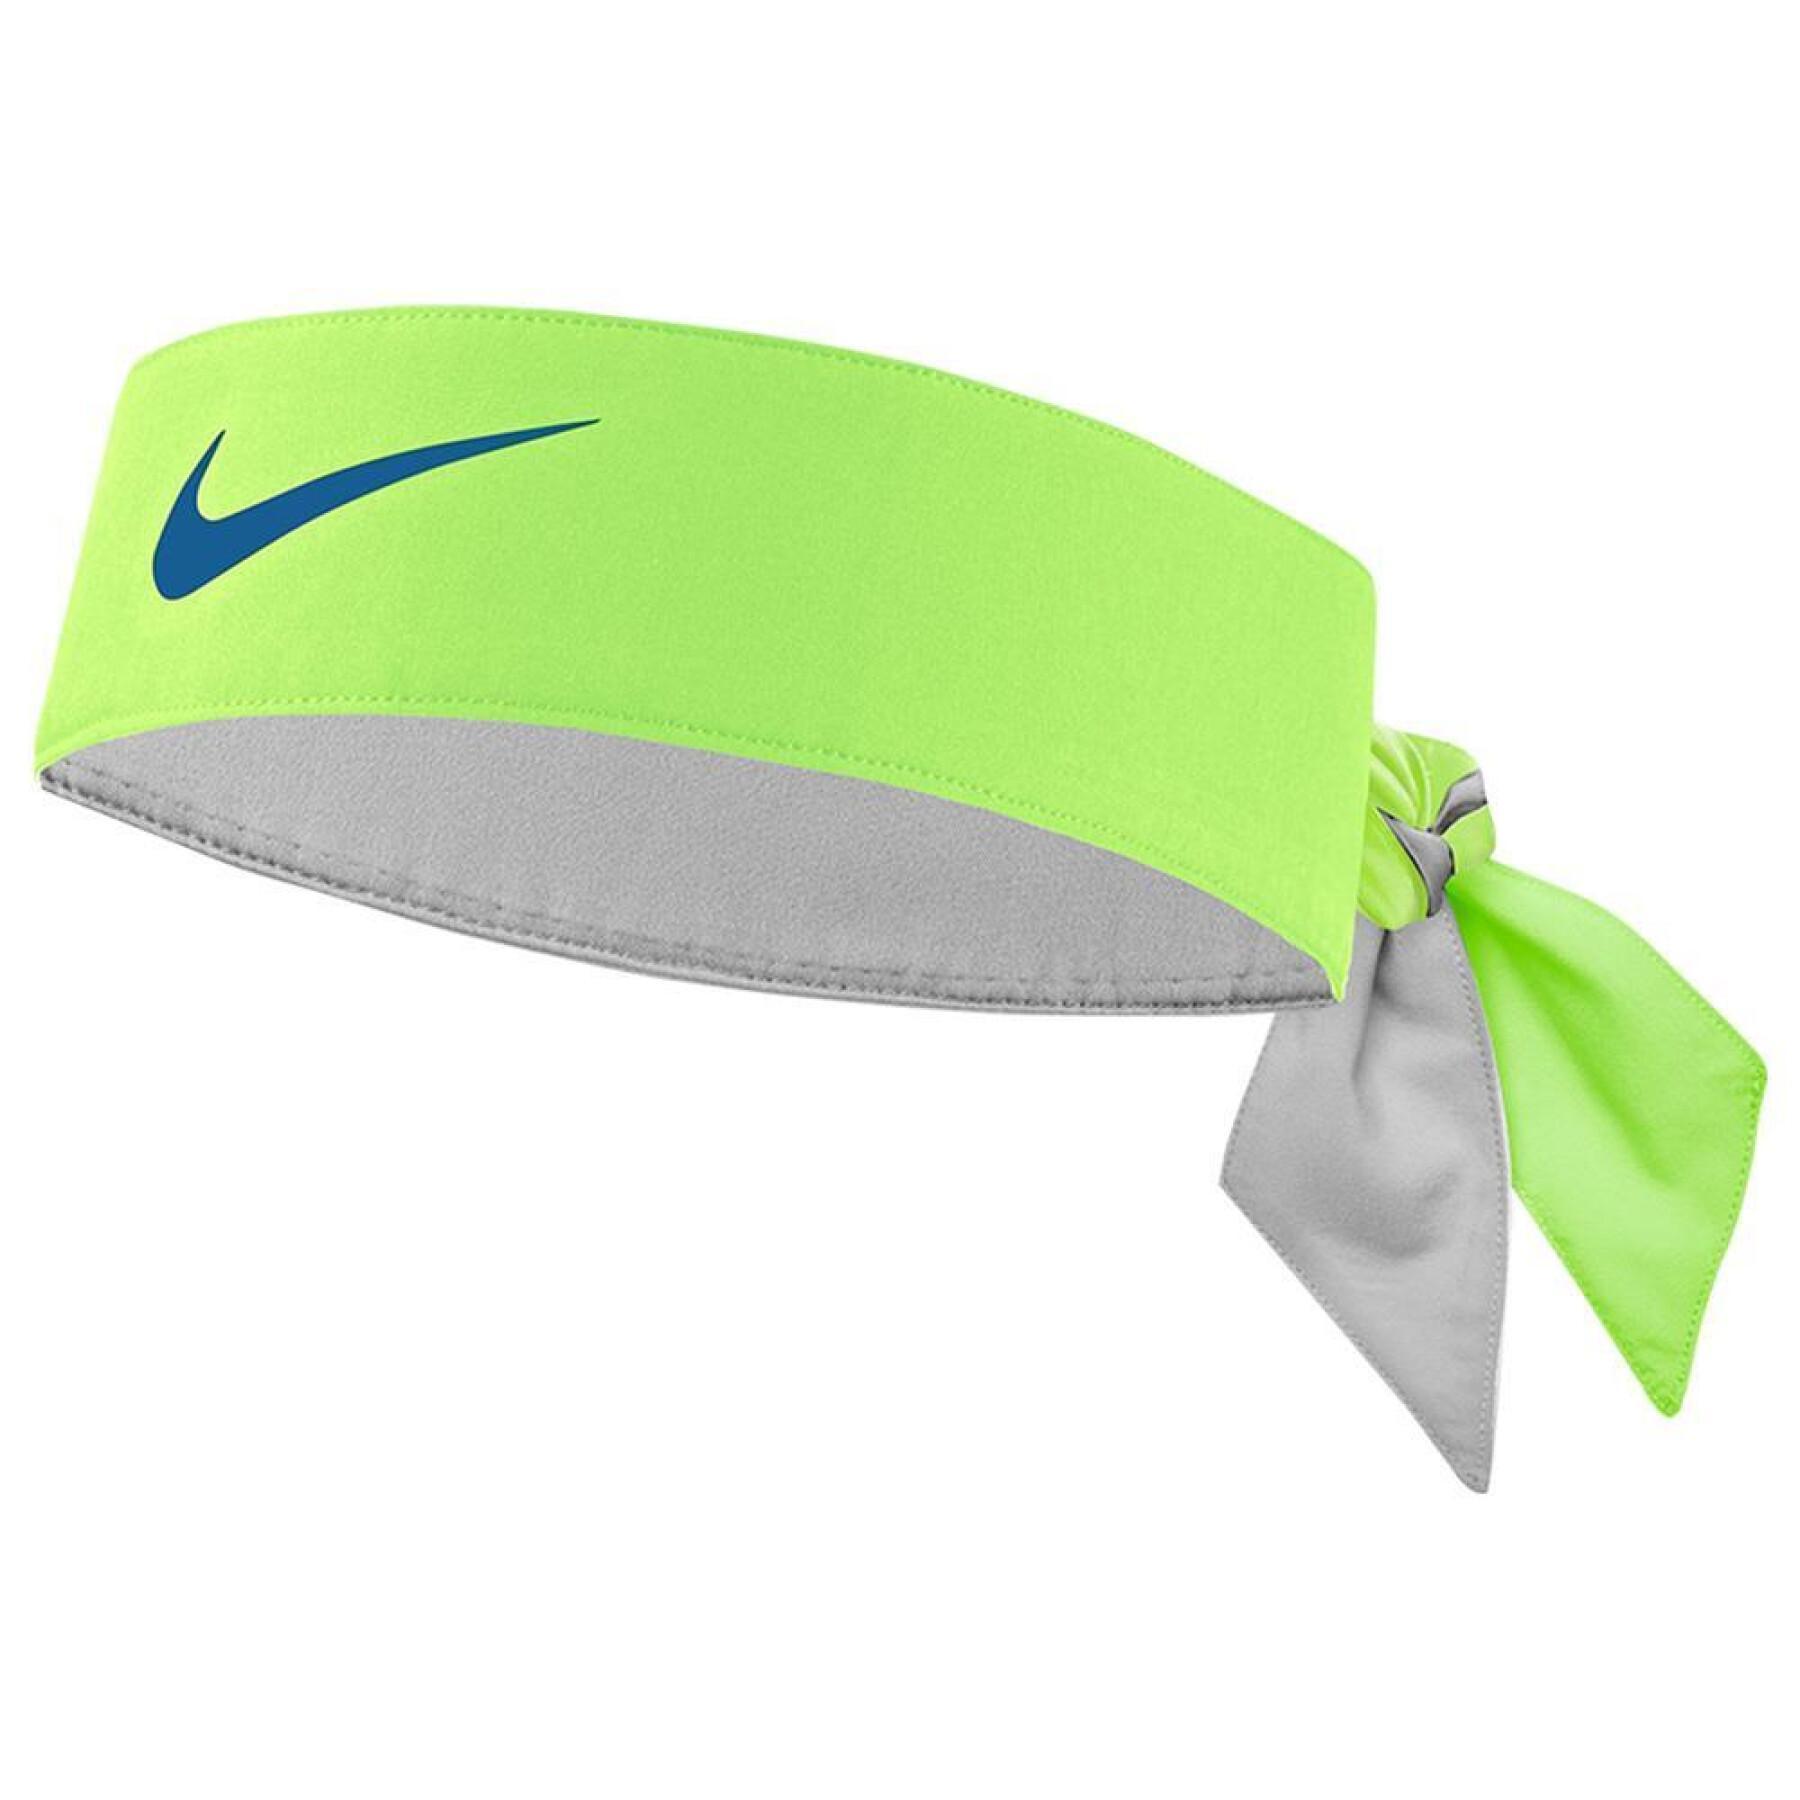 Archetto Nike tennis premier Nadal